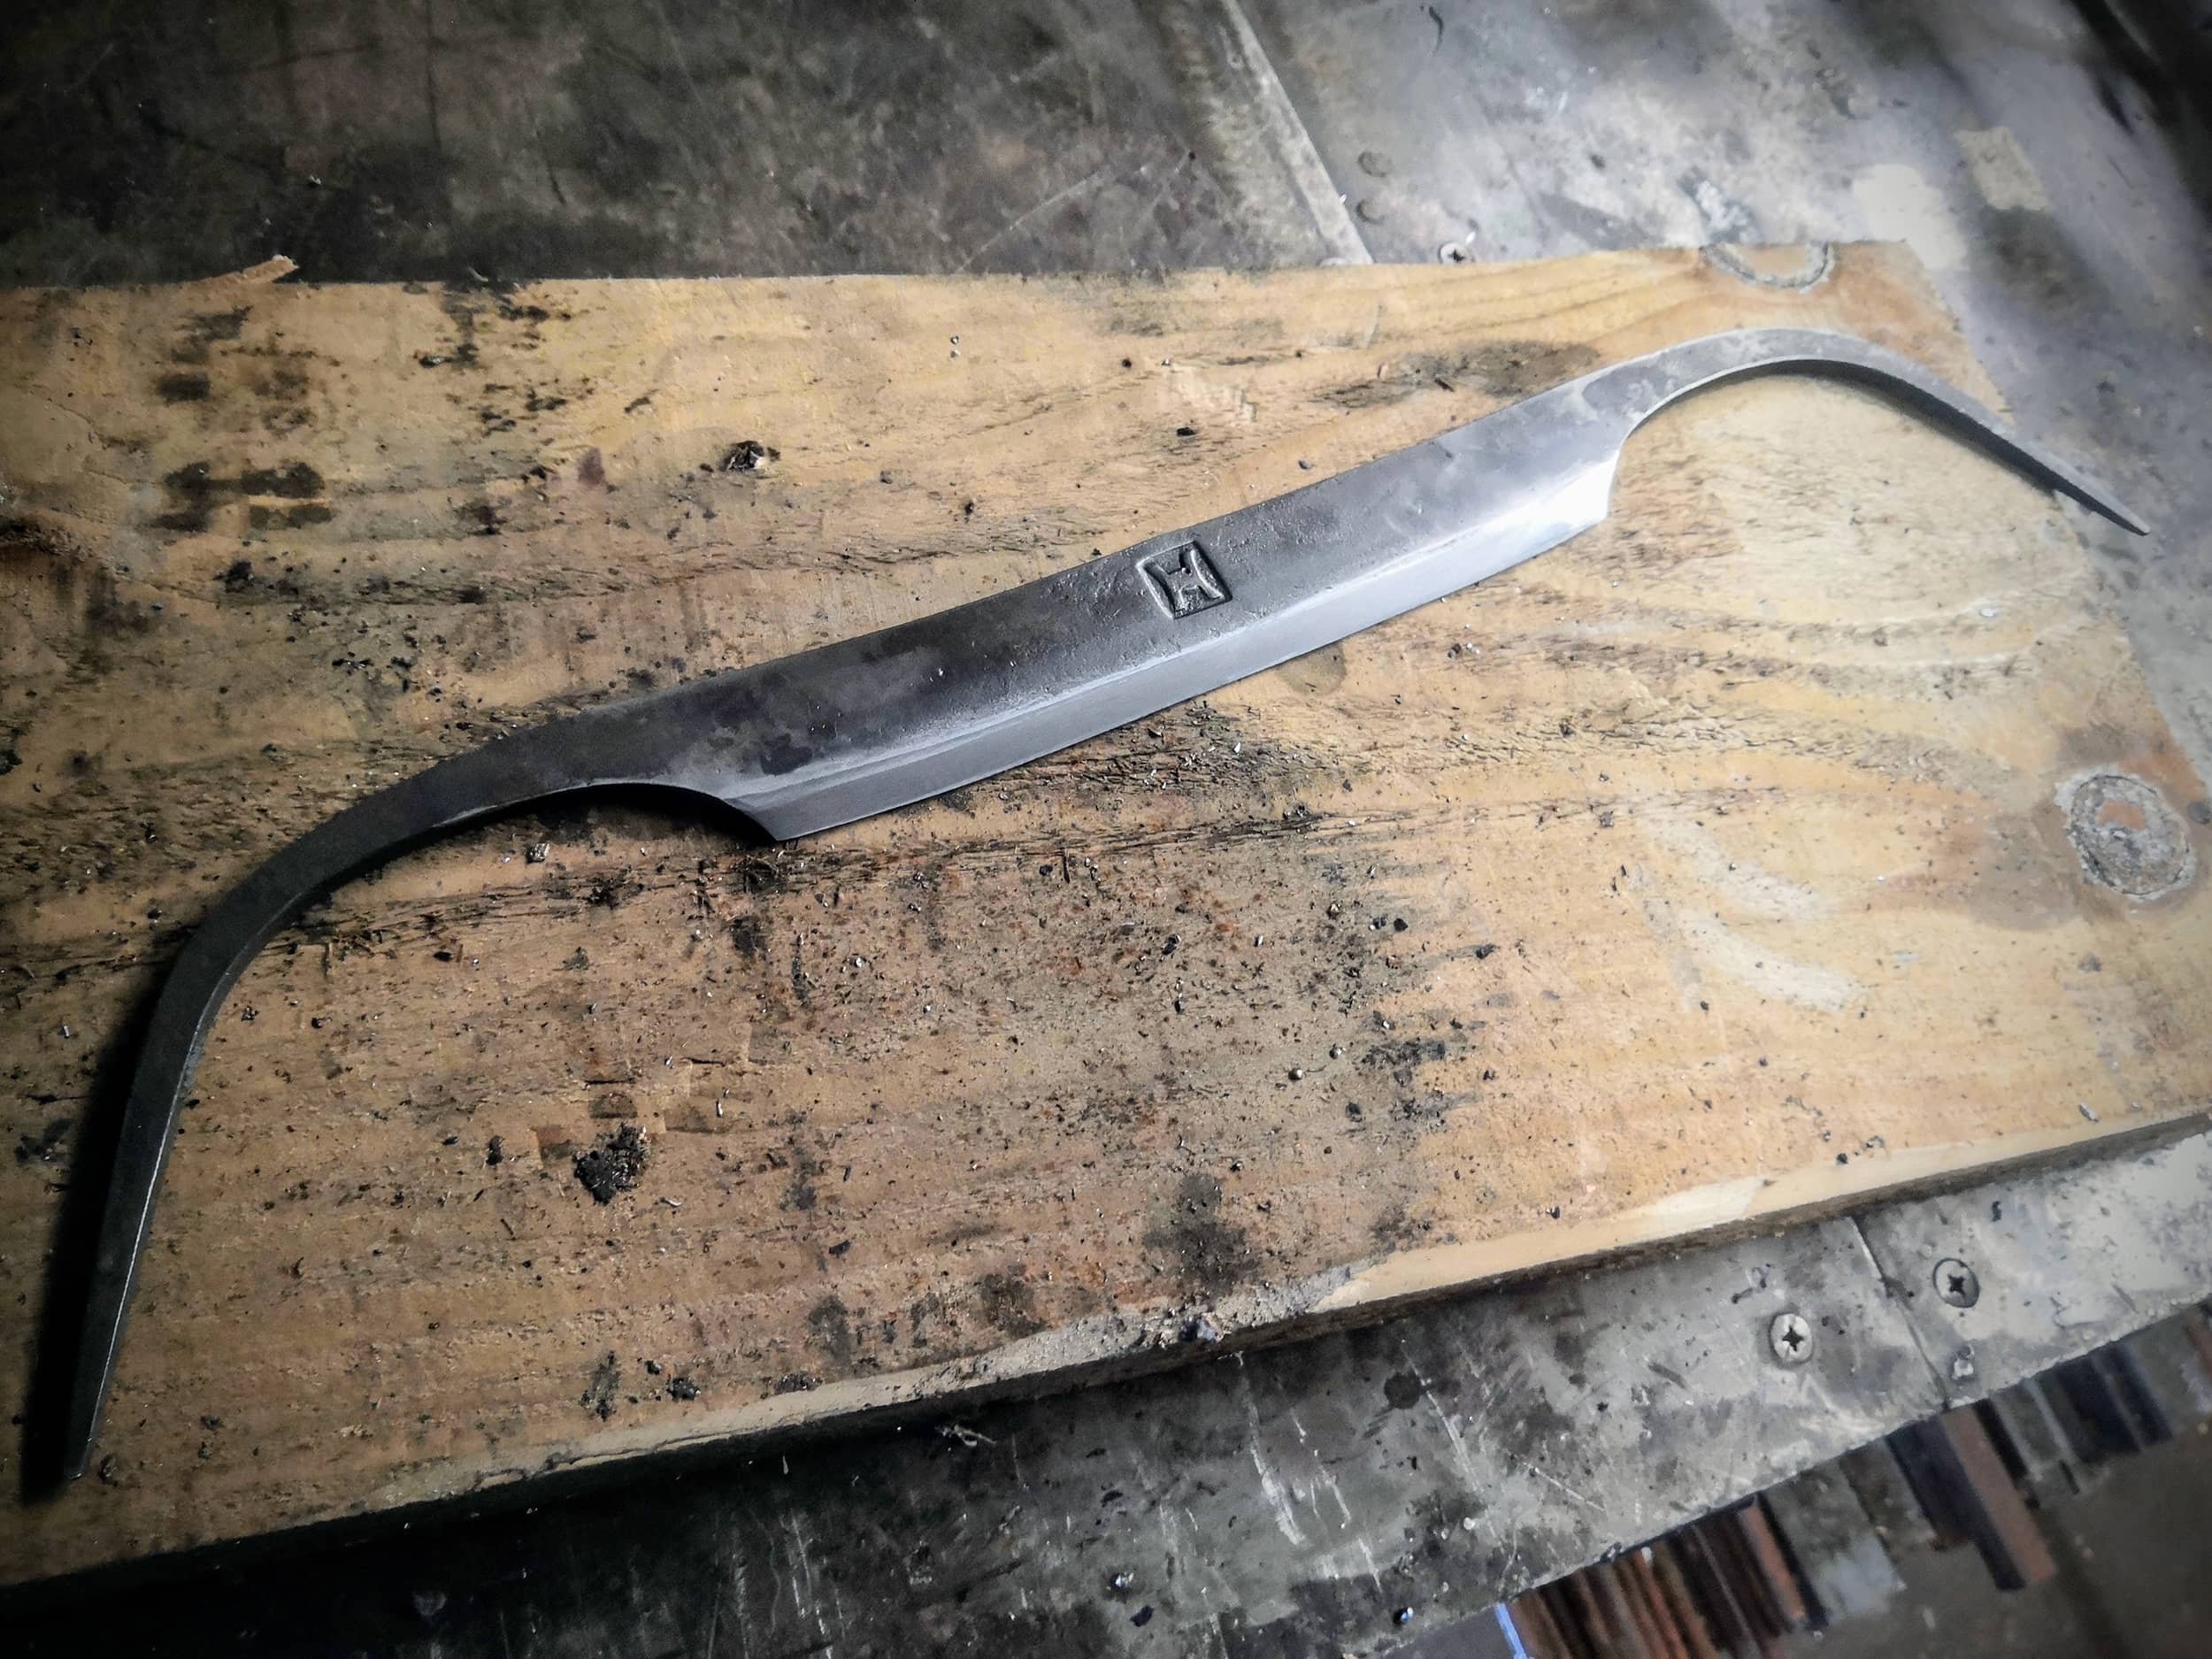 Blacksmithing - Forging a drawknife 